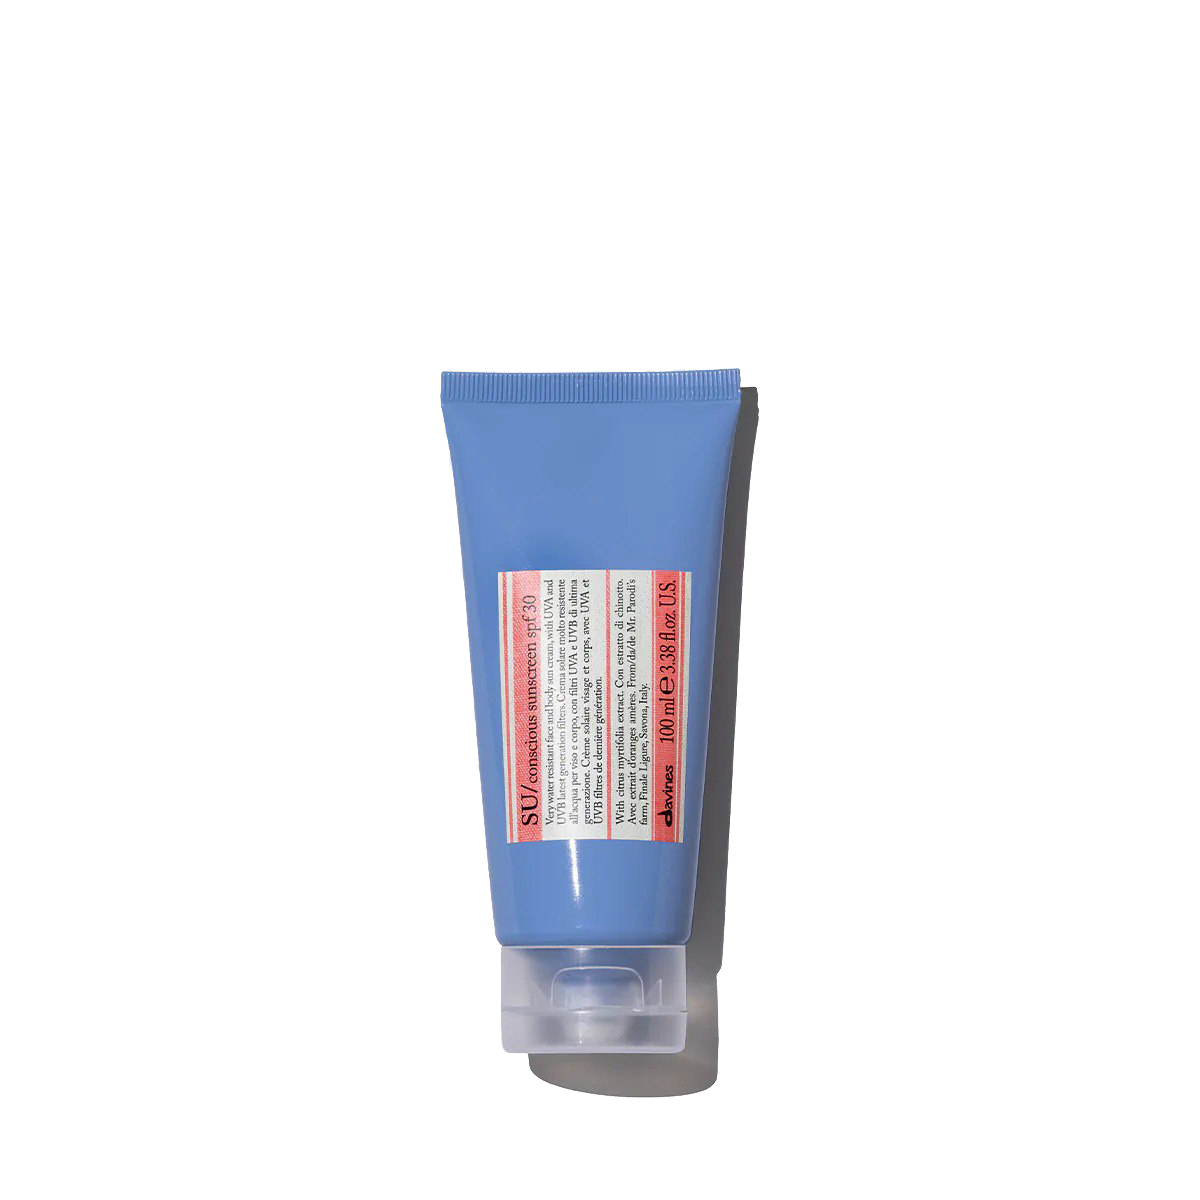 SU Protective Sun Cream SPF 30 - Солнцезащитный крем с SPF 30 , объем 100 мл - фото 1